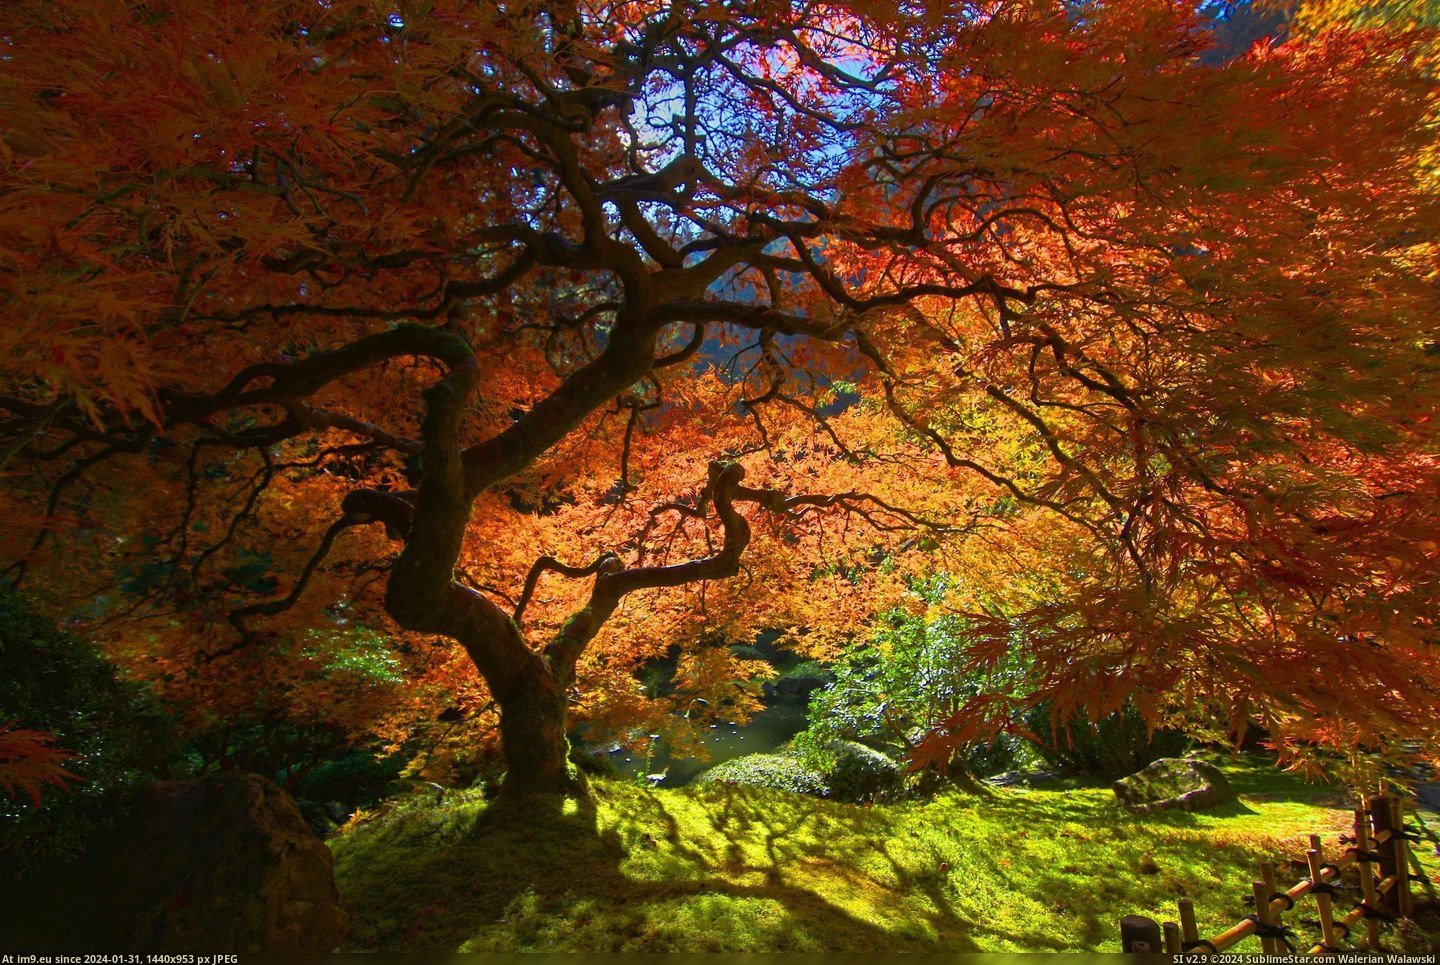 #Japanese #Maple #Portland [Pics] Japanese Maple in Portland Pic. (Obraz z album My r/PICS favs))